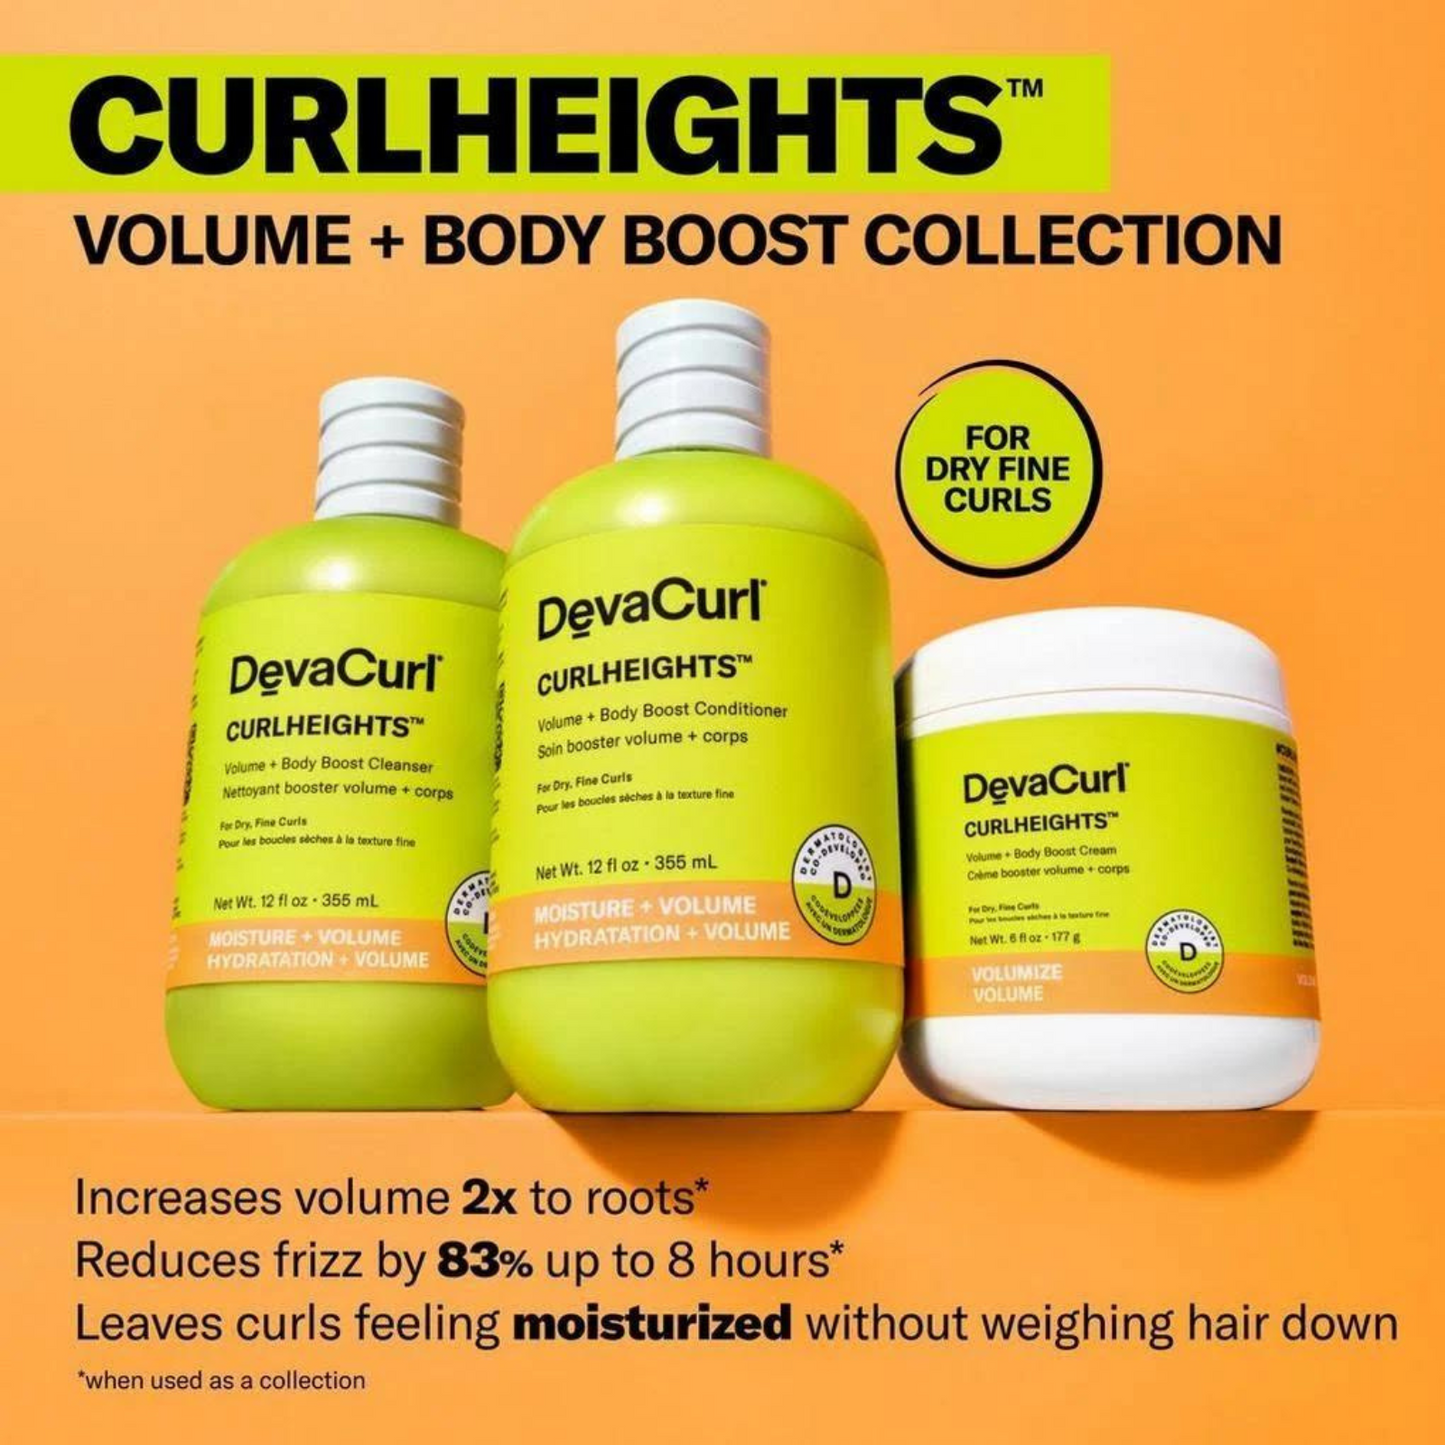 Deva Curl - CurlHeights Volume & Body Boost Cream